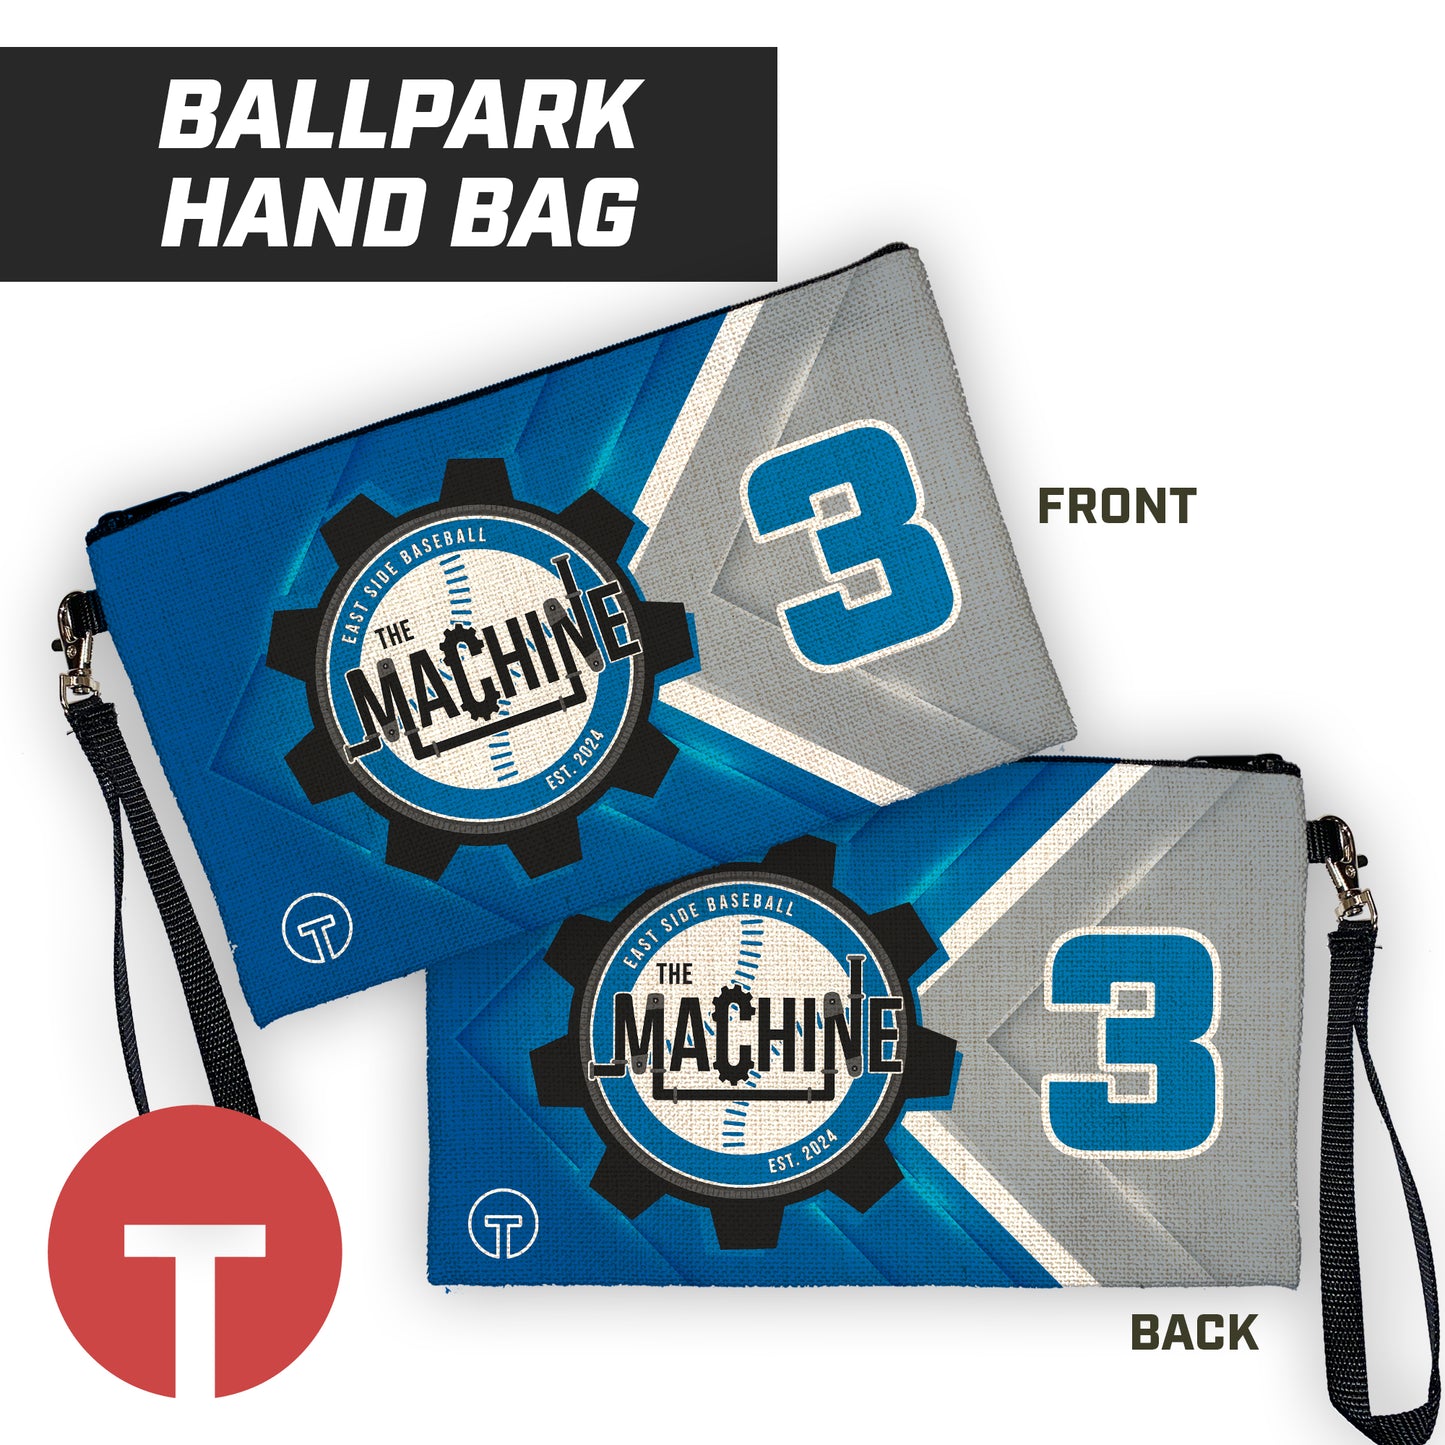 East Side Machine Baseball - 9"x5" Zipper Bag with Wrist Strap